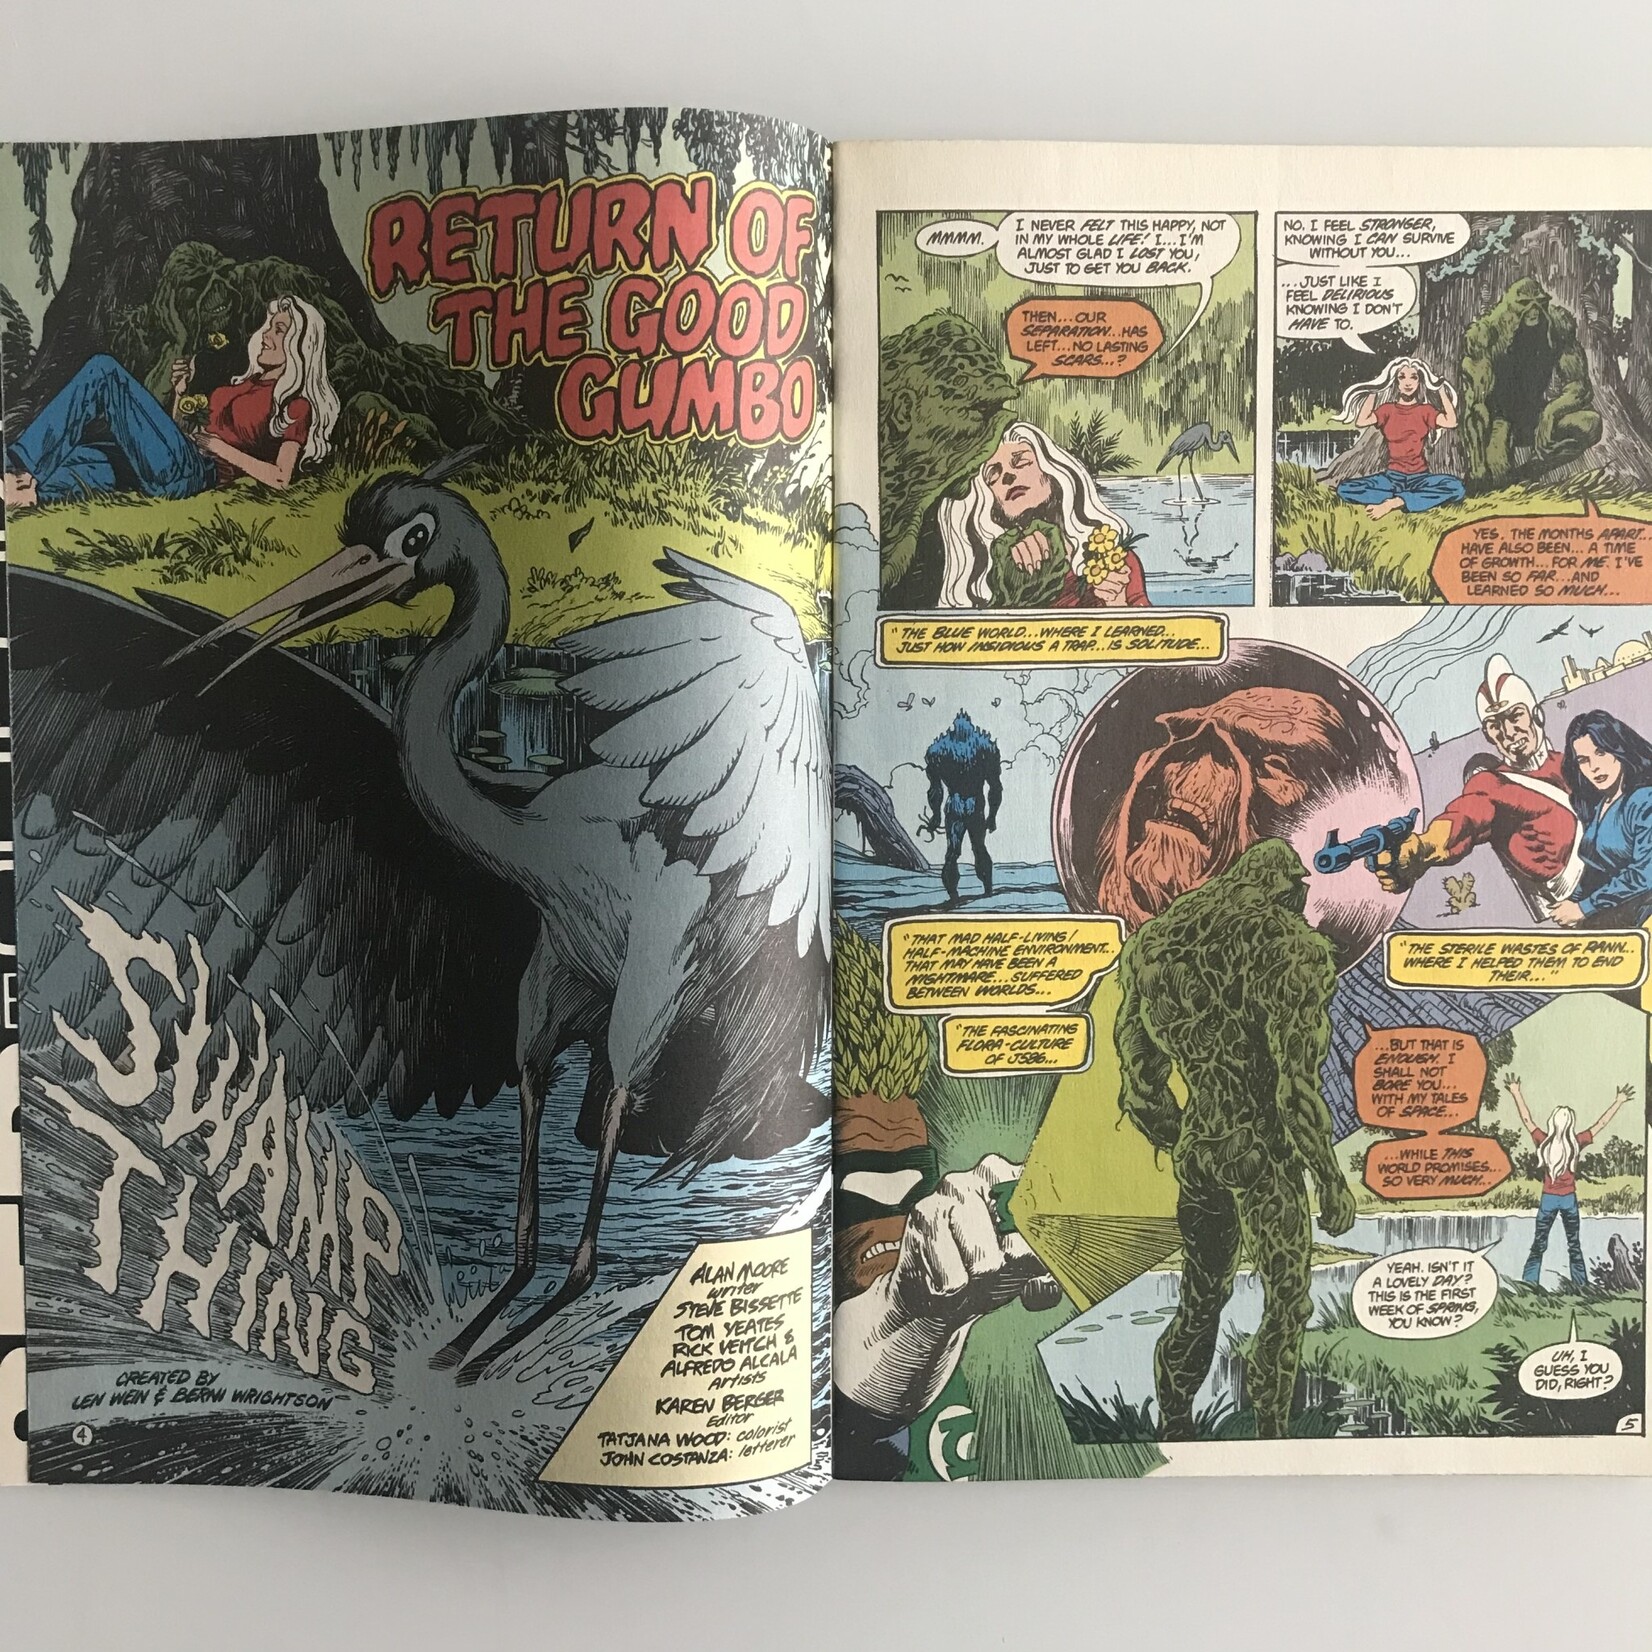 Swamp Thing - Vol. 2 #64 September 1987 - Comic Book